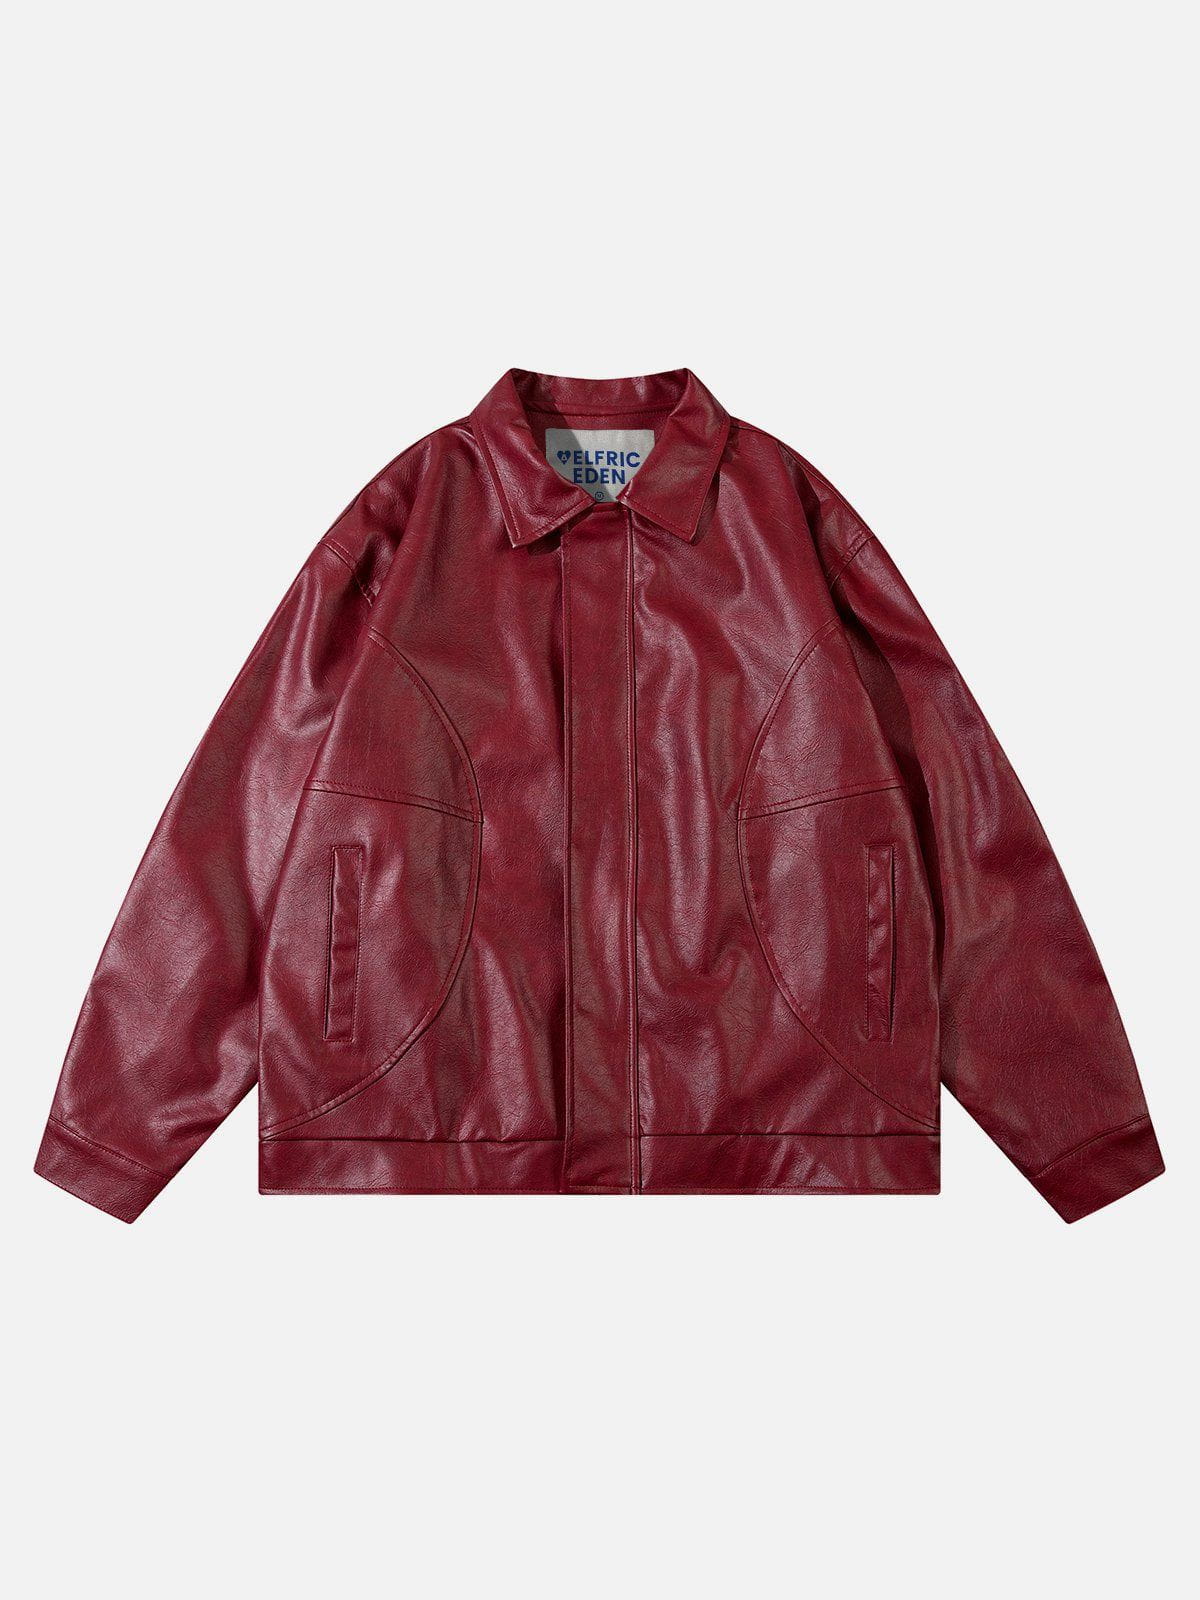 Aelfric Eden Solid Vintage Faux Leather Jacket